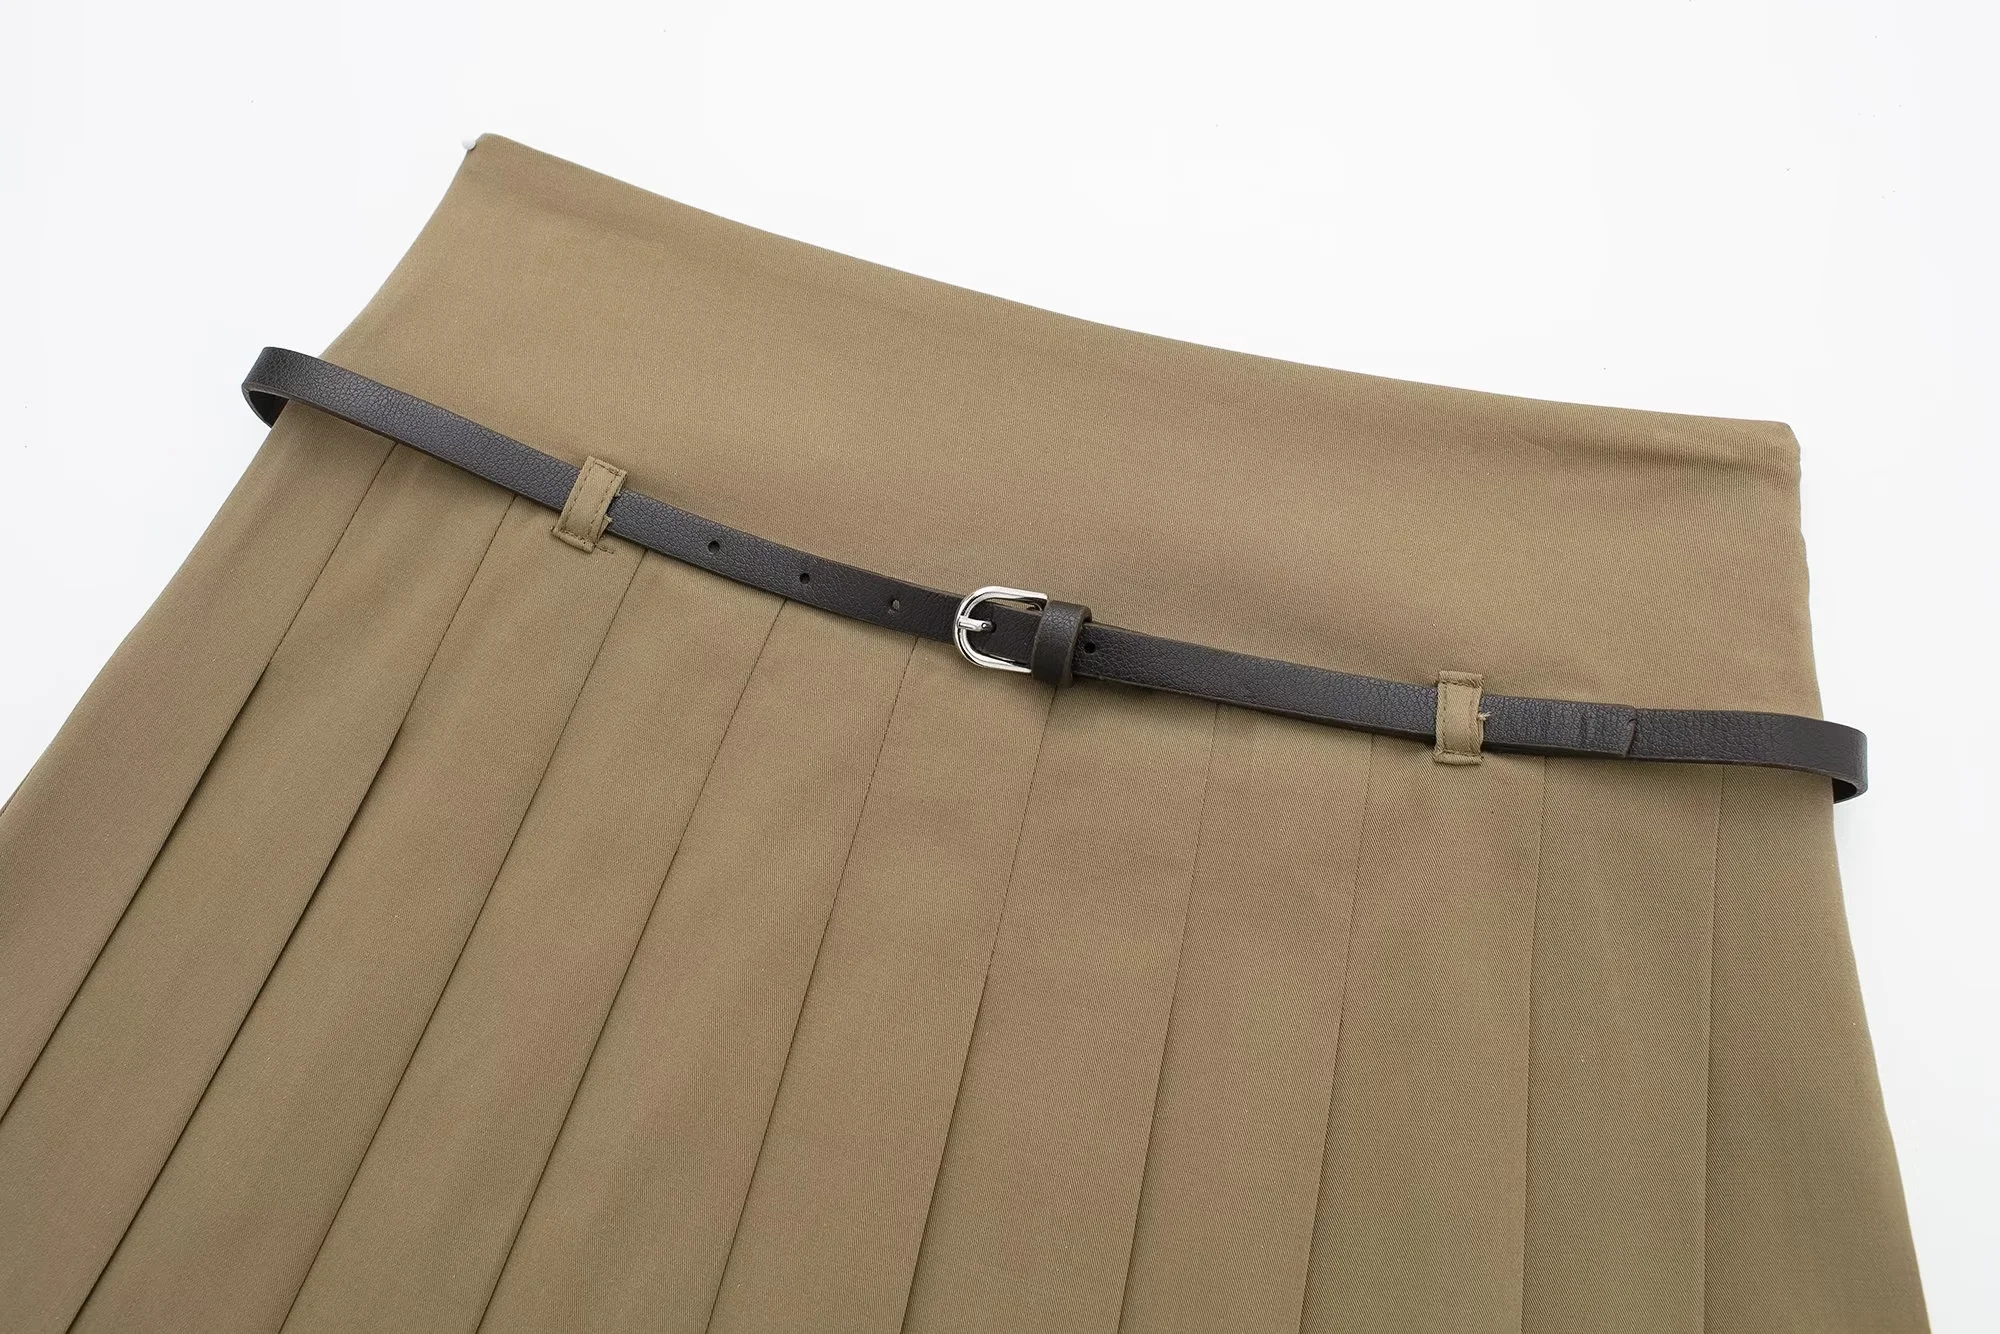 Fashion Khaki Blended Wide Pleated Skirt,Skirts